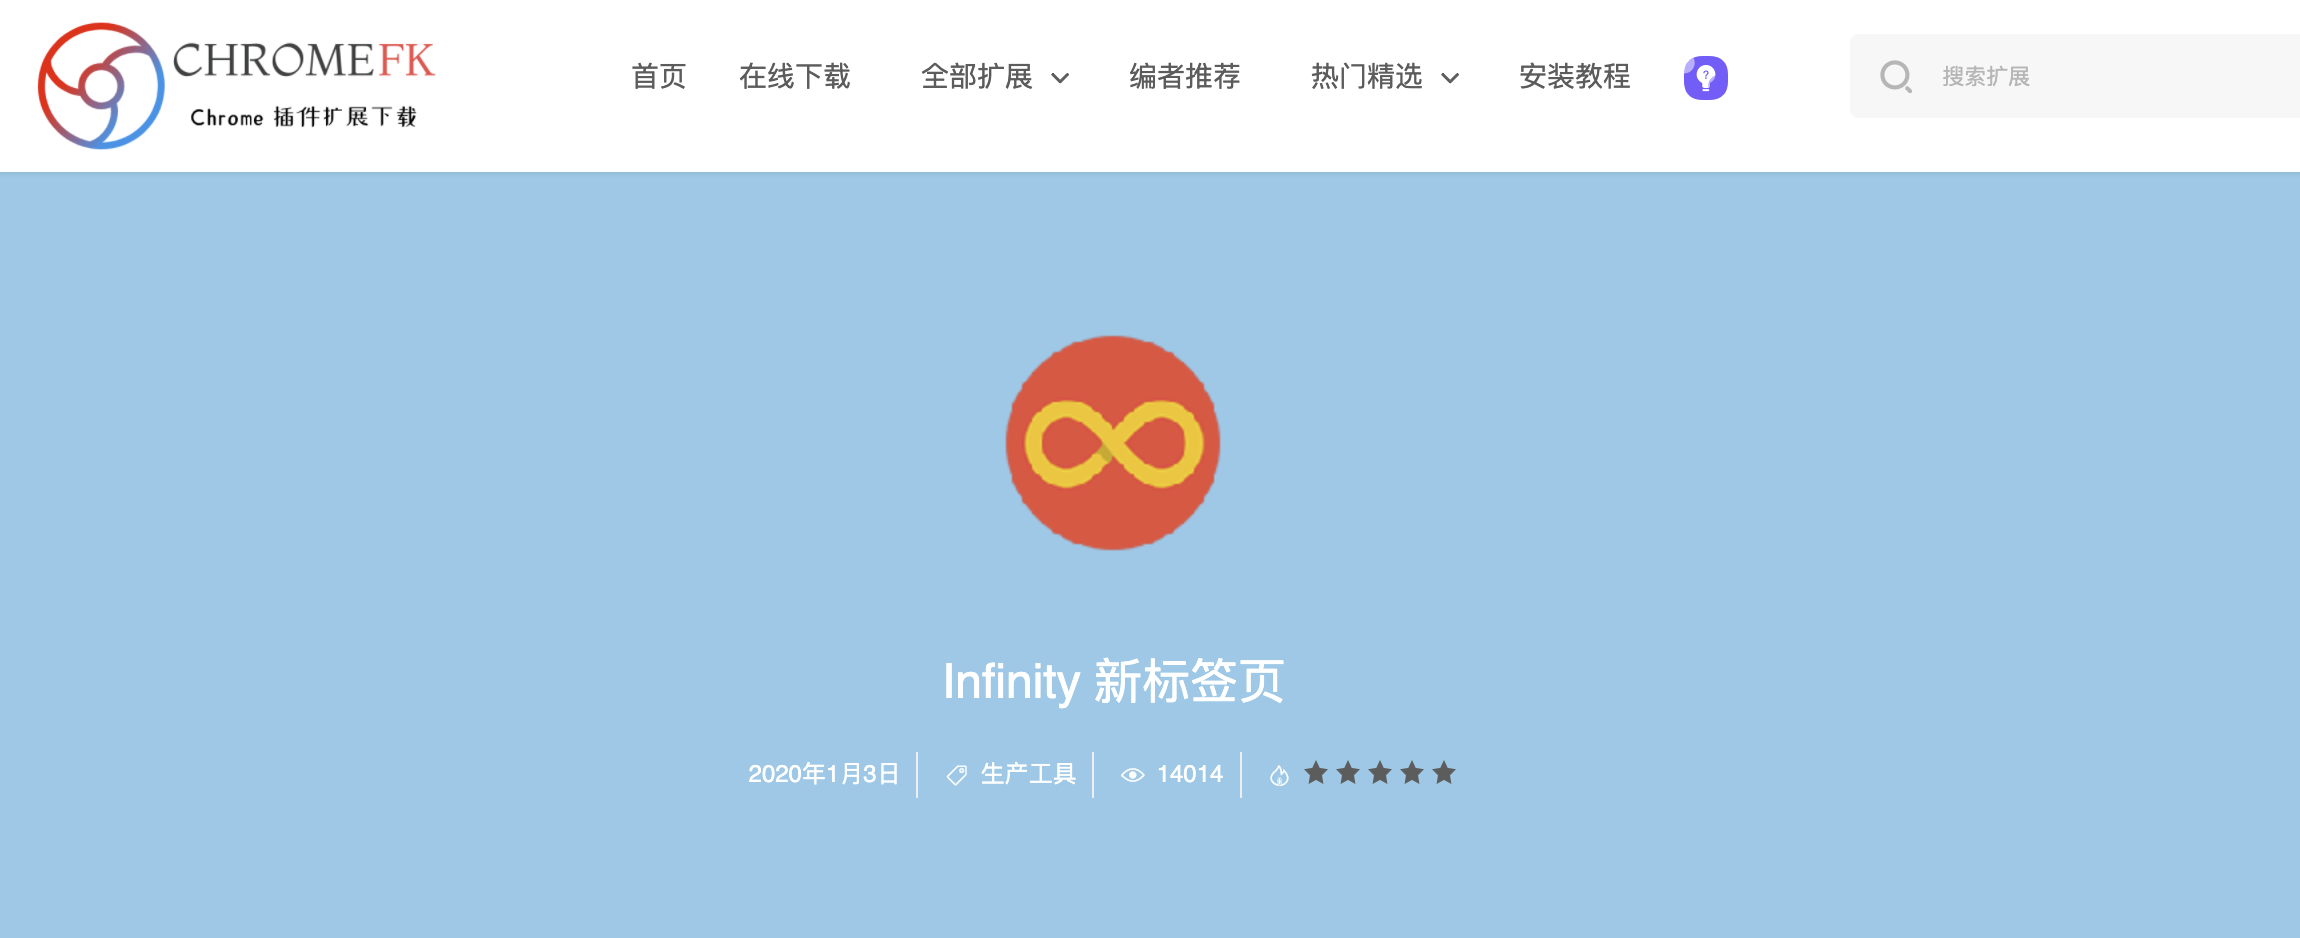 1,【chromefk】infinity 新标签页